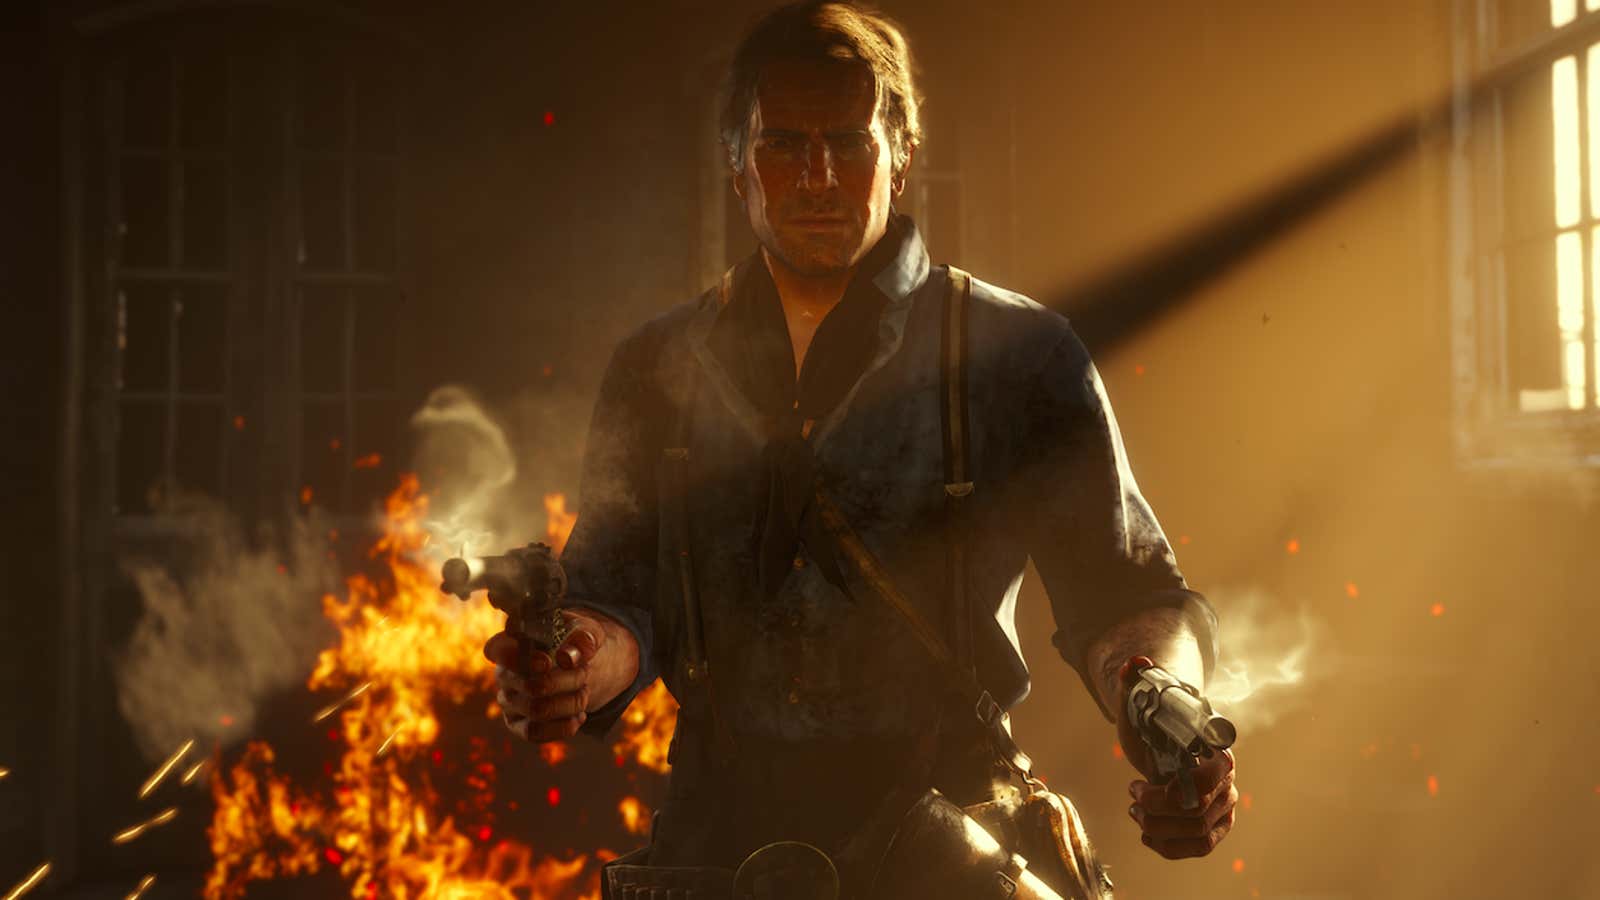 Red Dead Redemption 2 makes $725 million in debut for Rockstar Games